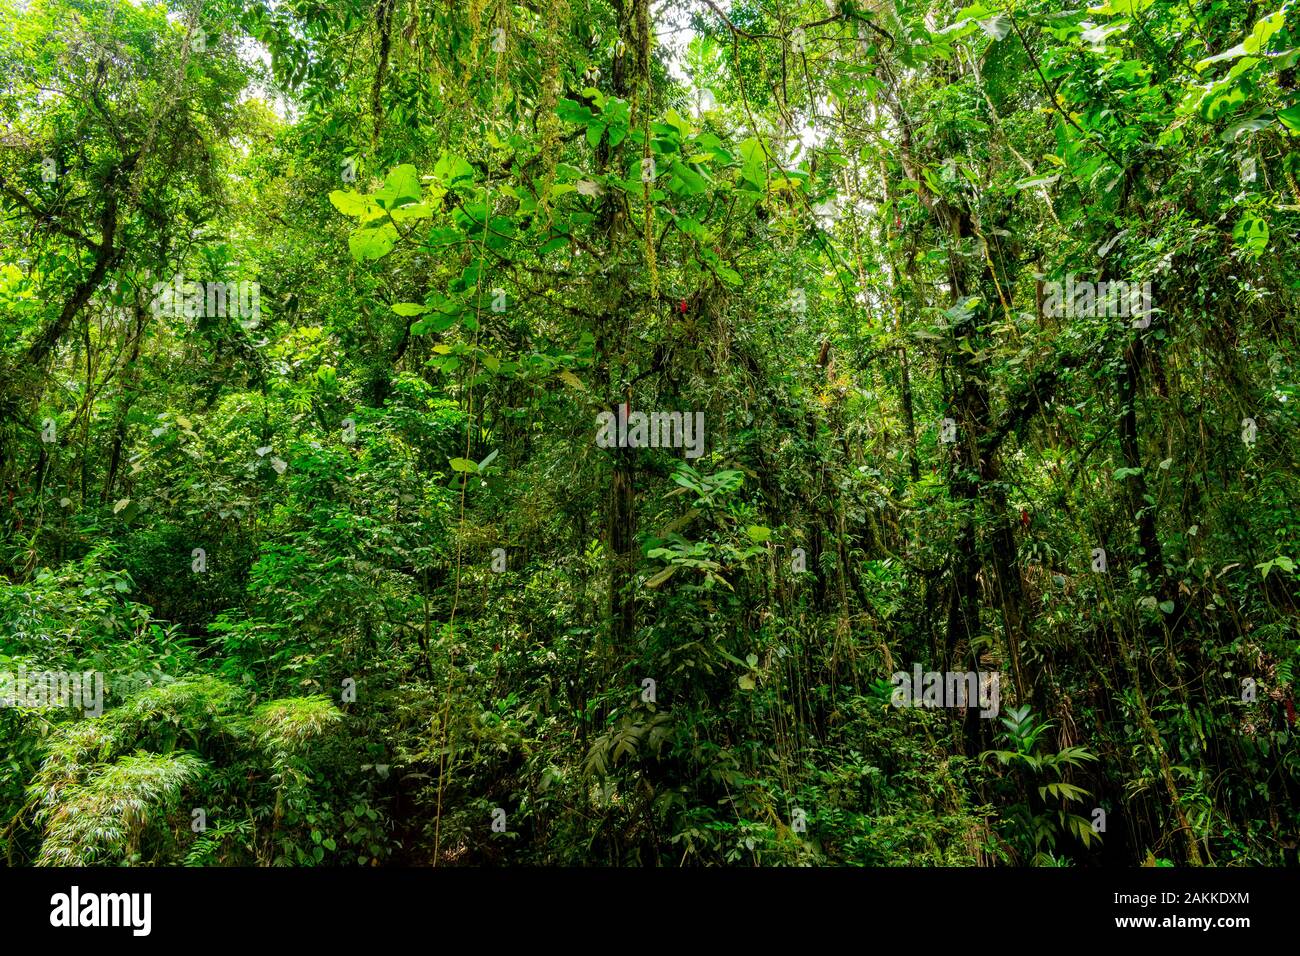 Brazilian rainforest and its dense tropical vegetation. Stock Photo